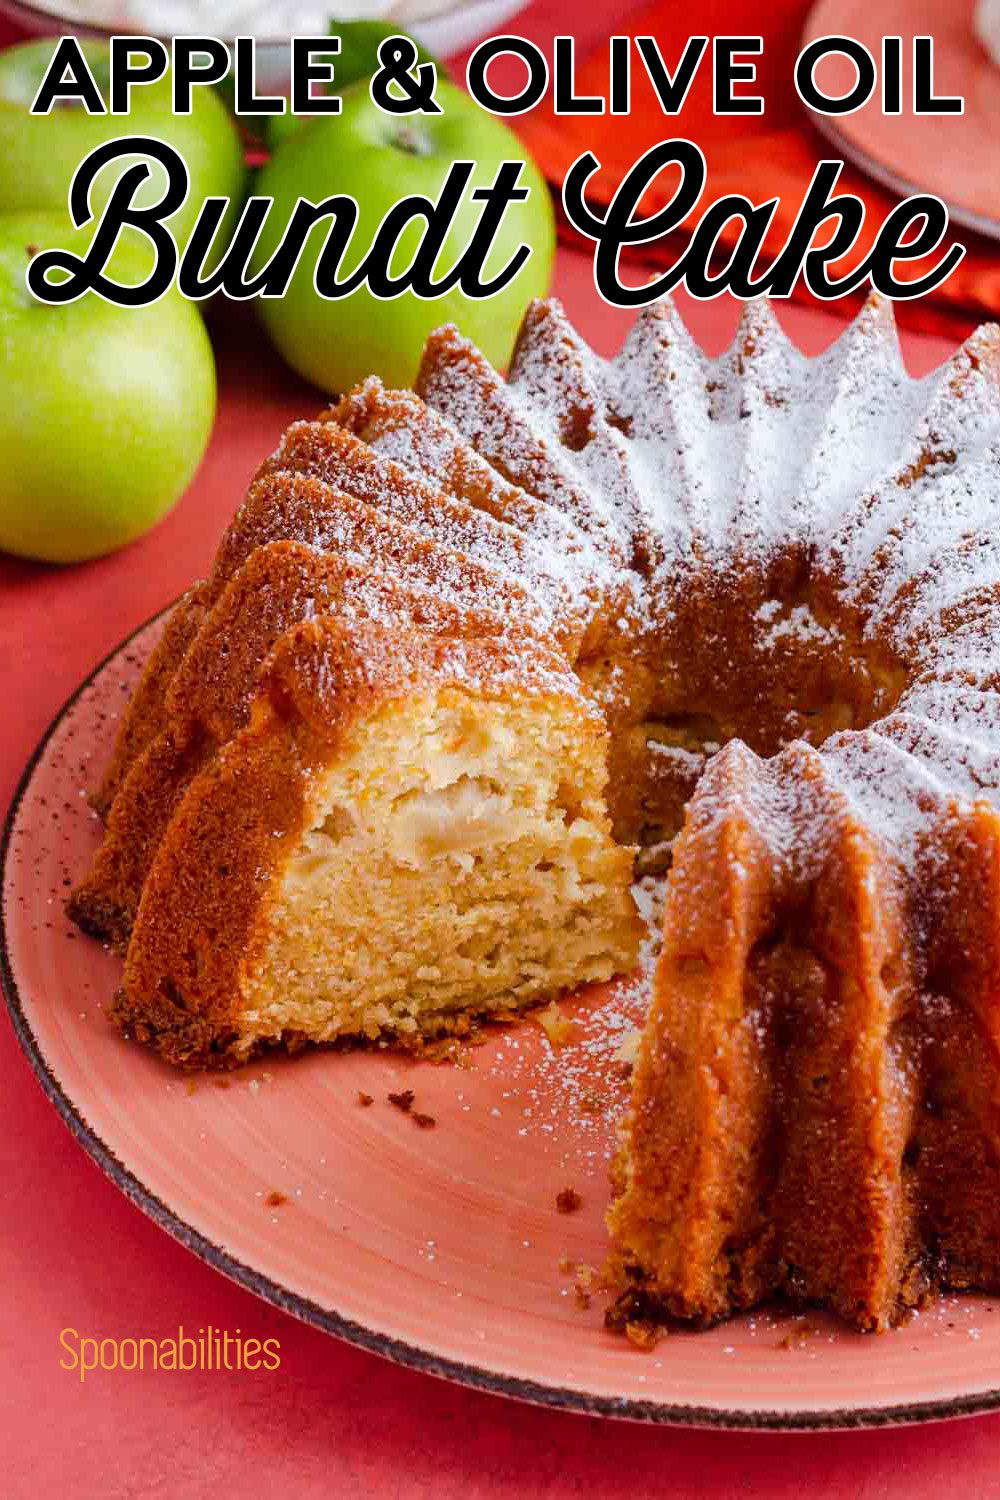 Vanilla Bundt Cake Using Butter Pound Cake Recipe - Veena Azmanov